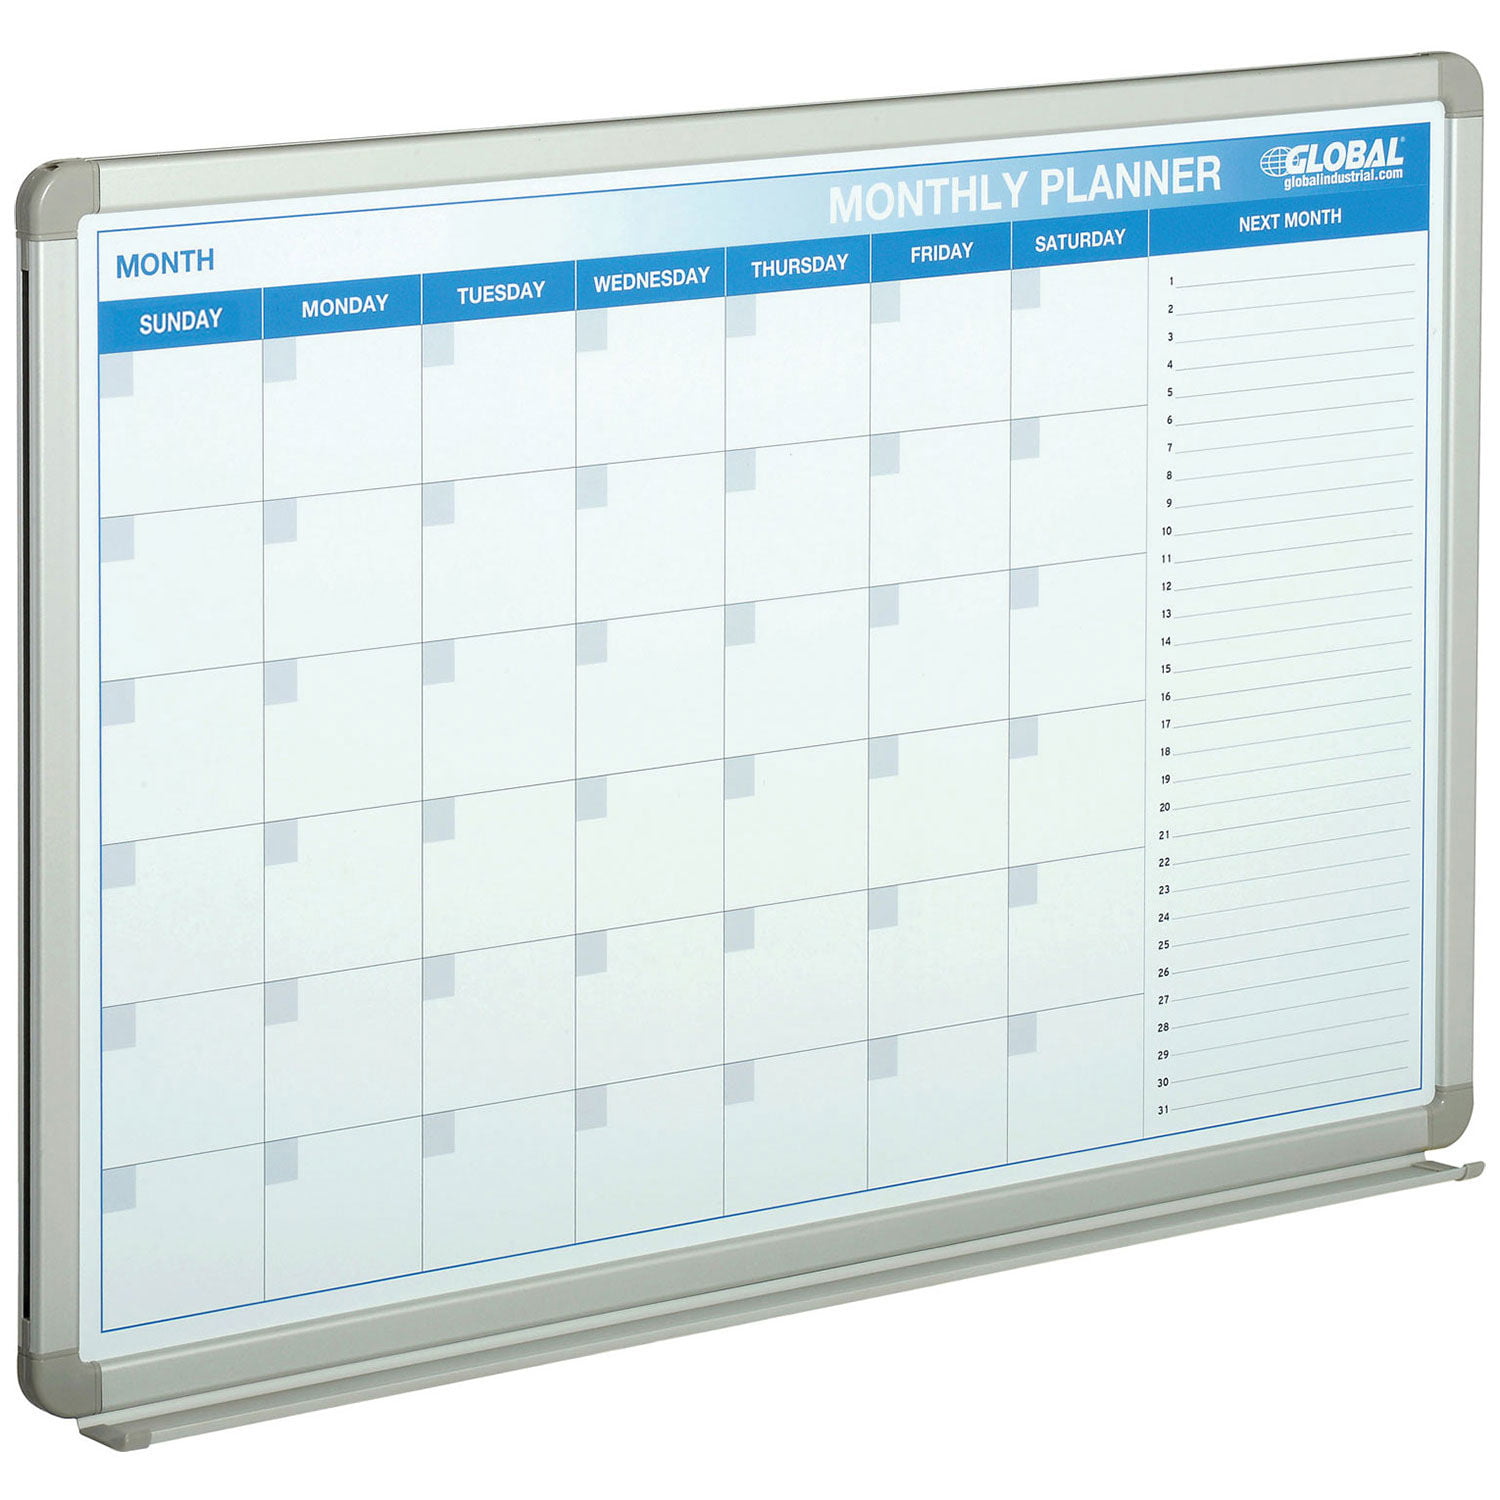 36"W x 24"H Dry Erase Calendar Board